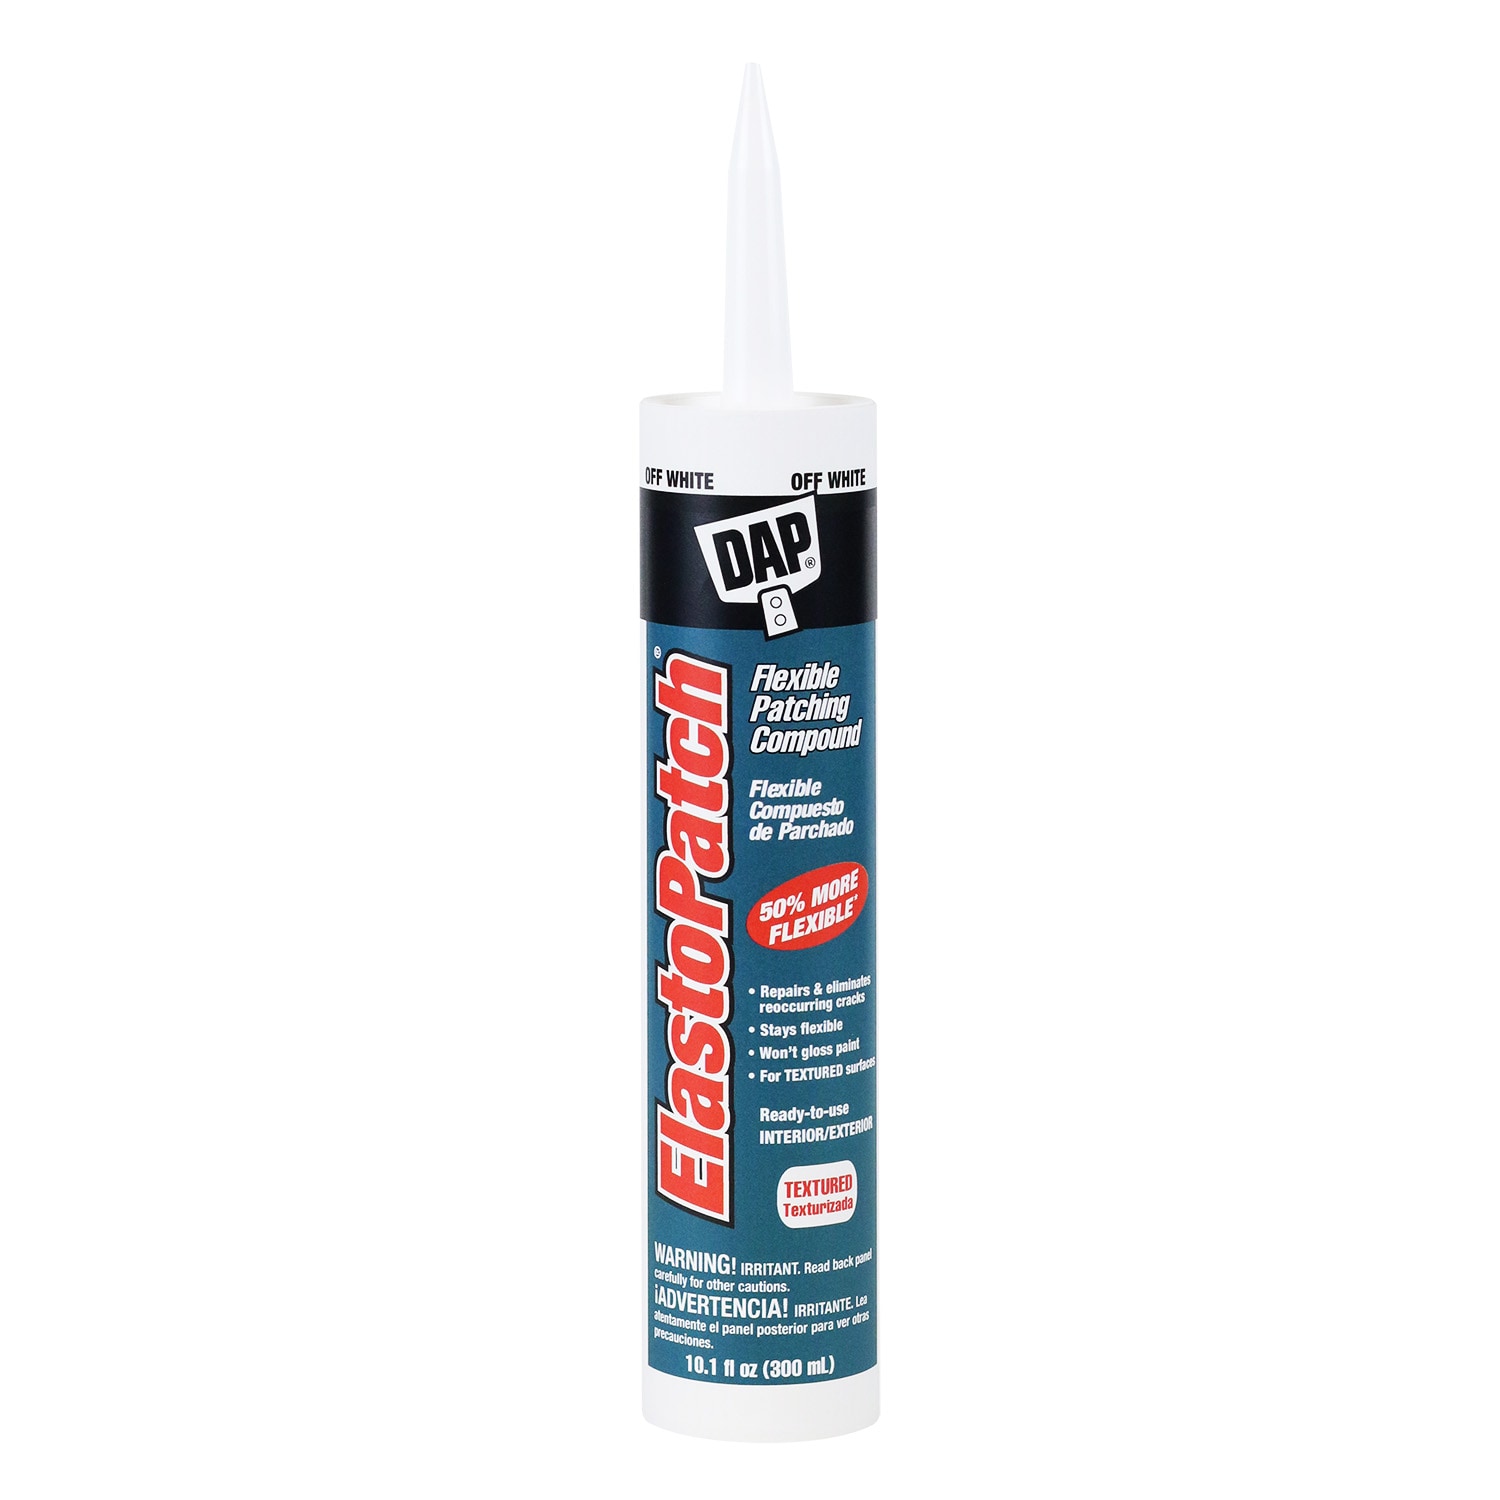 Wall Repair Patch Kit Cracks Holes Sealer Sandable Paintable DryDex 8 oz